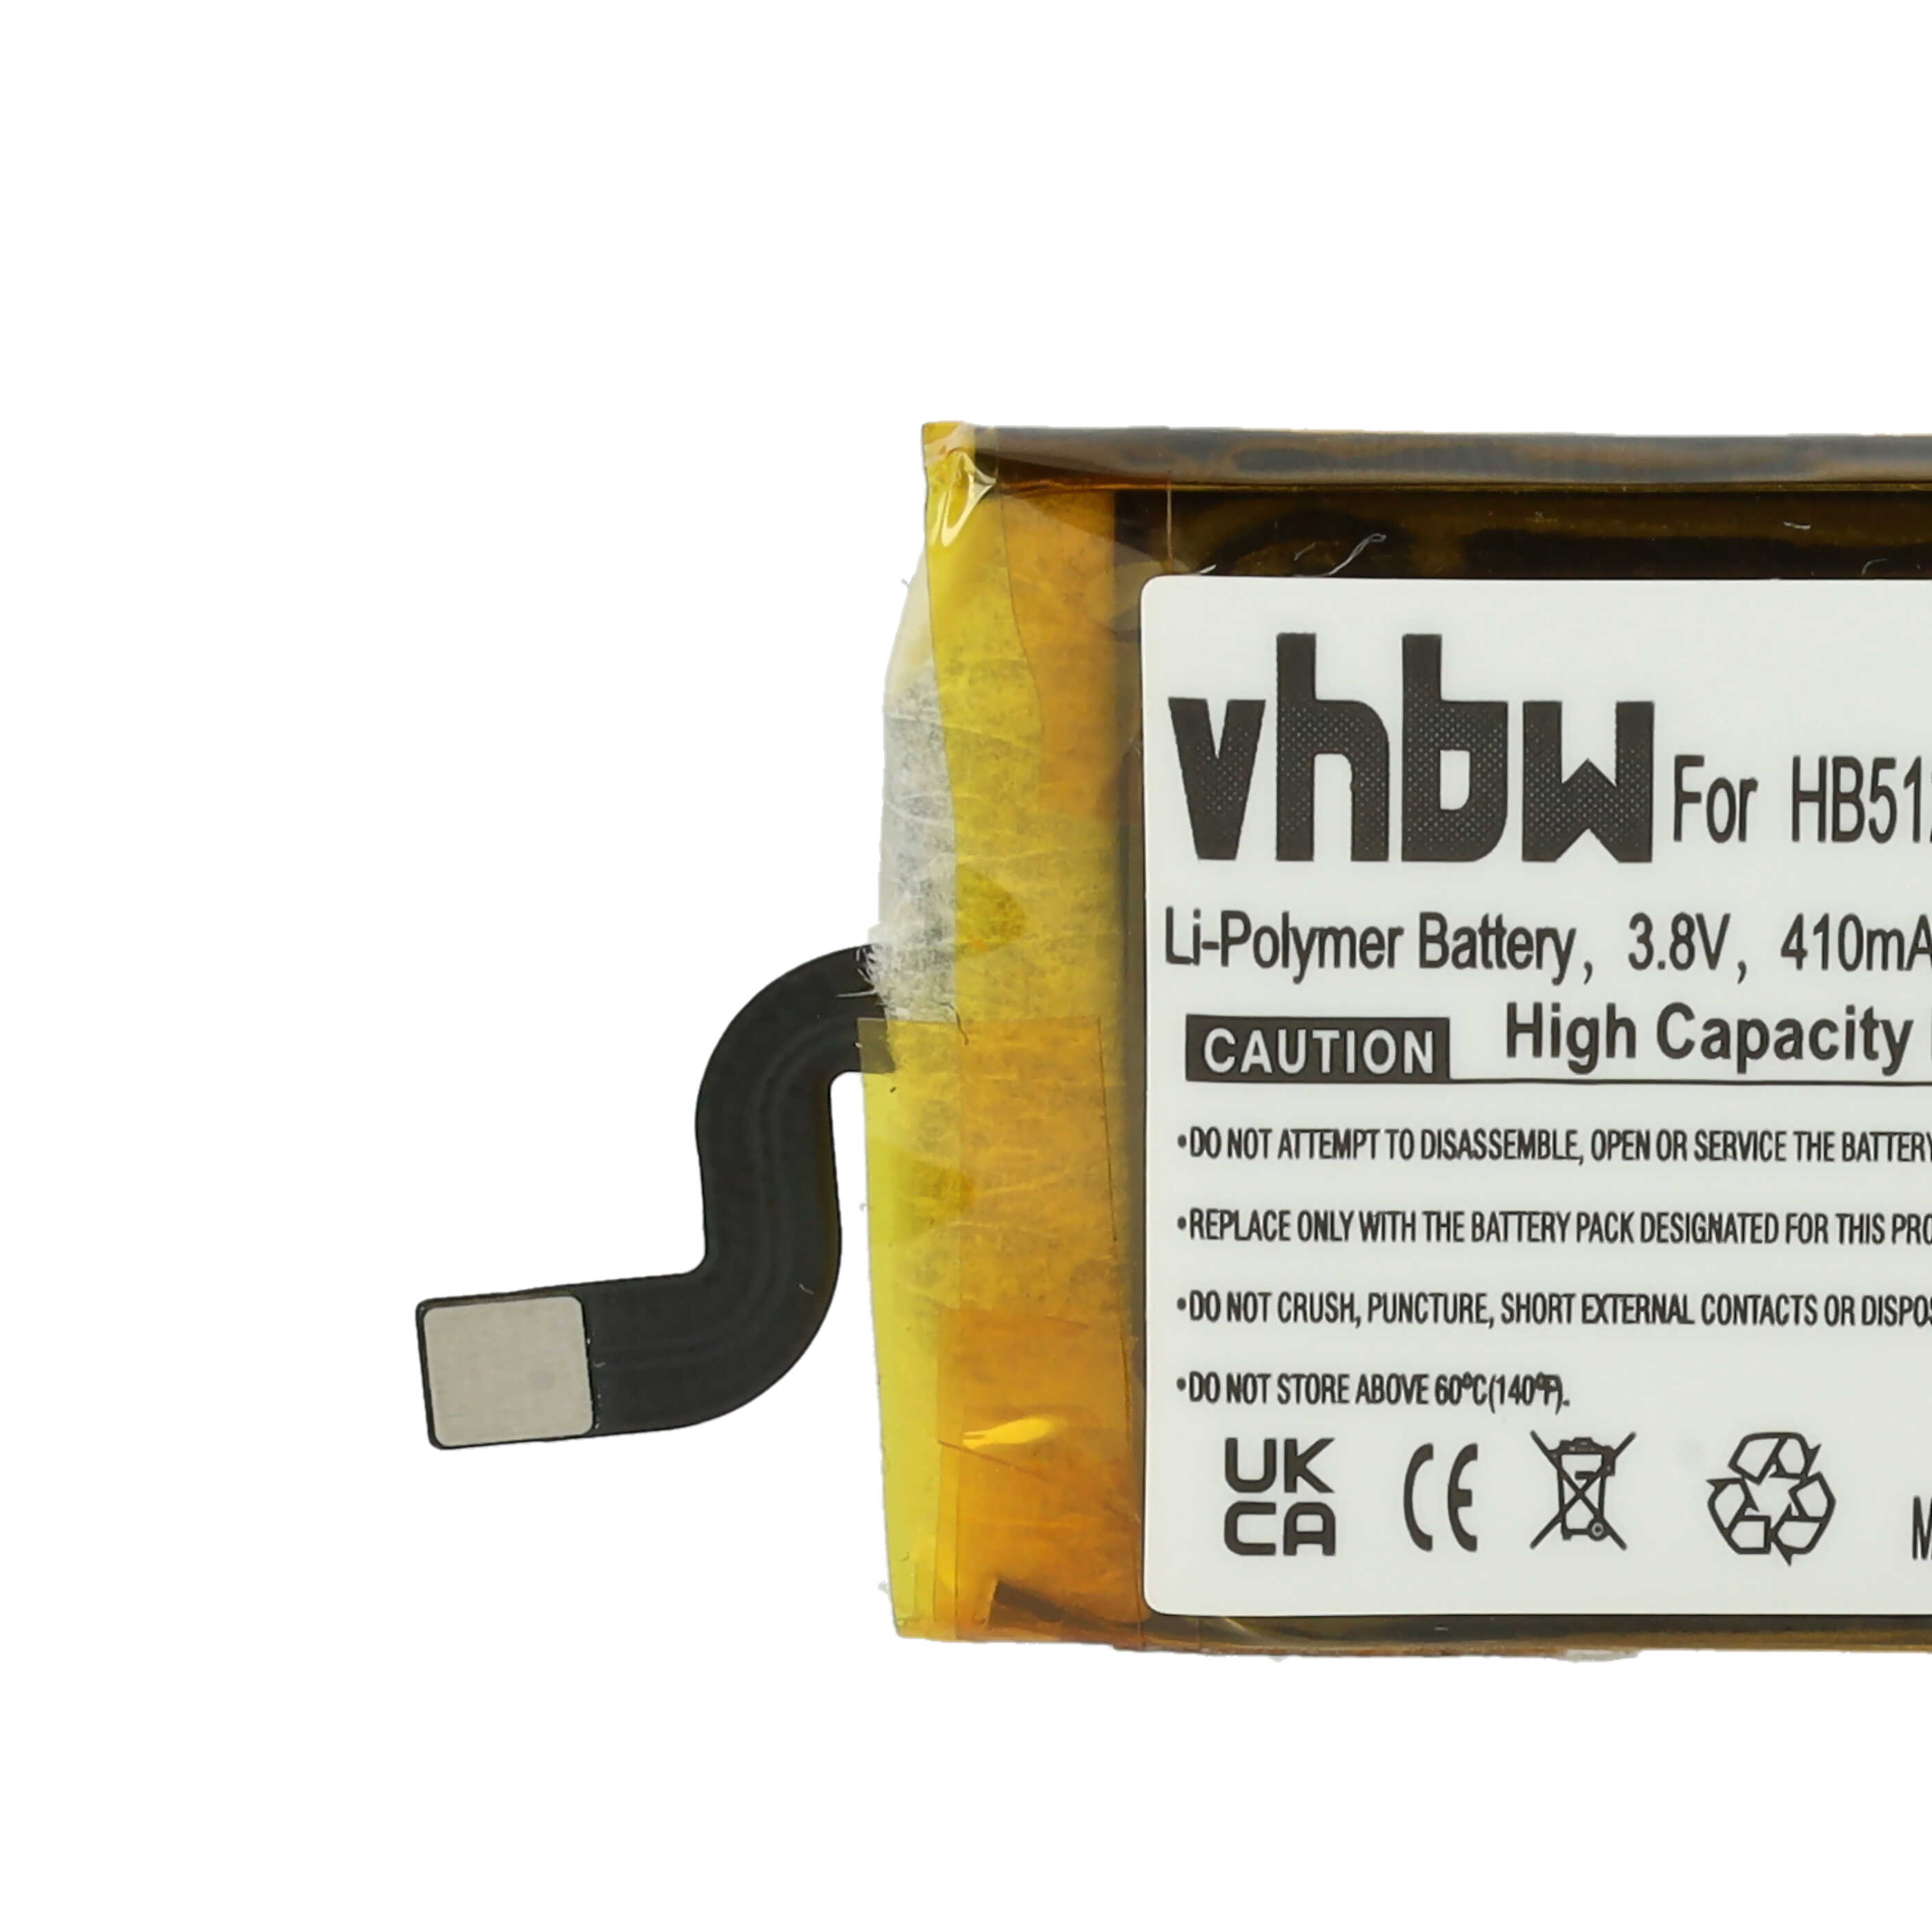 Smartwatch Battery Replacement for Huawei HB512627ECW - 410mAh 3.8V Li-polymer + Tools